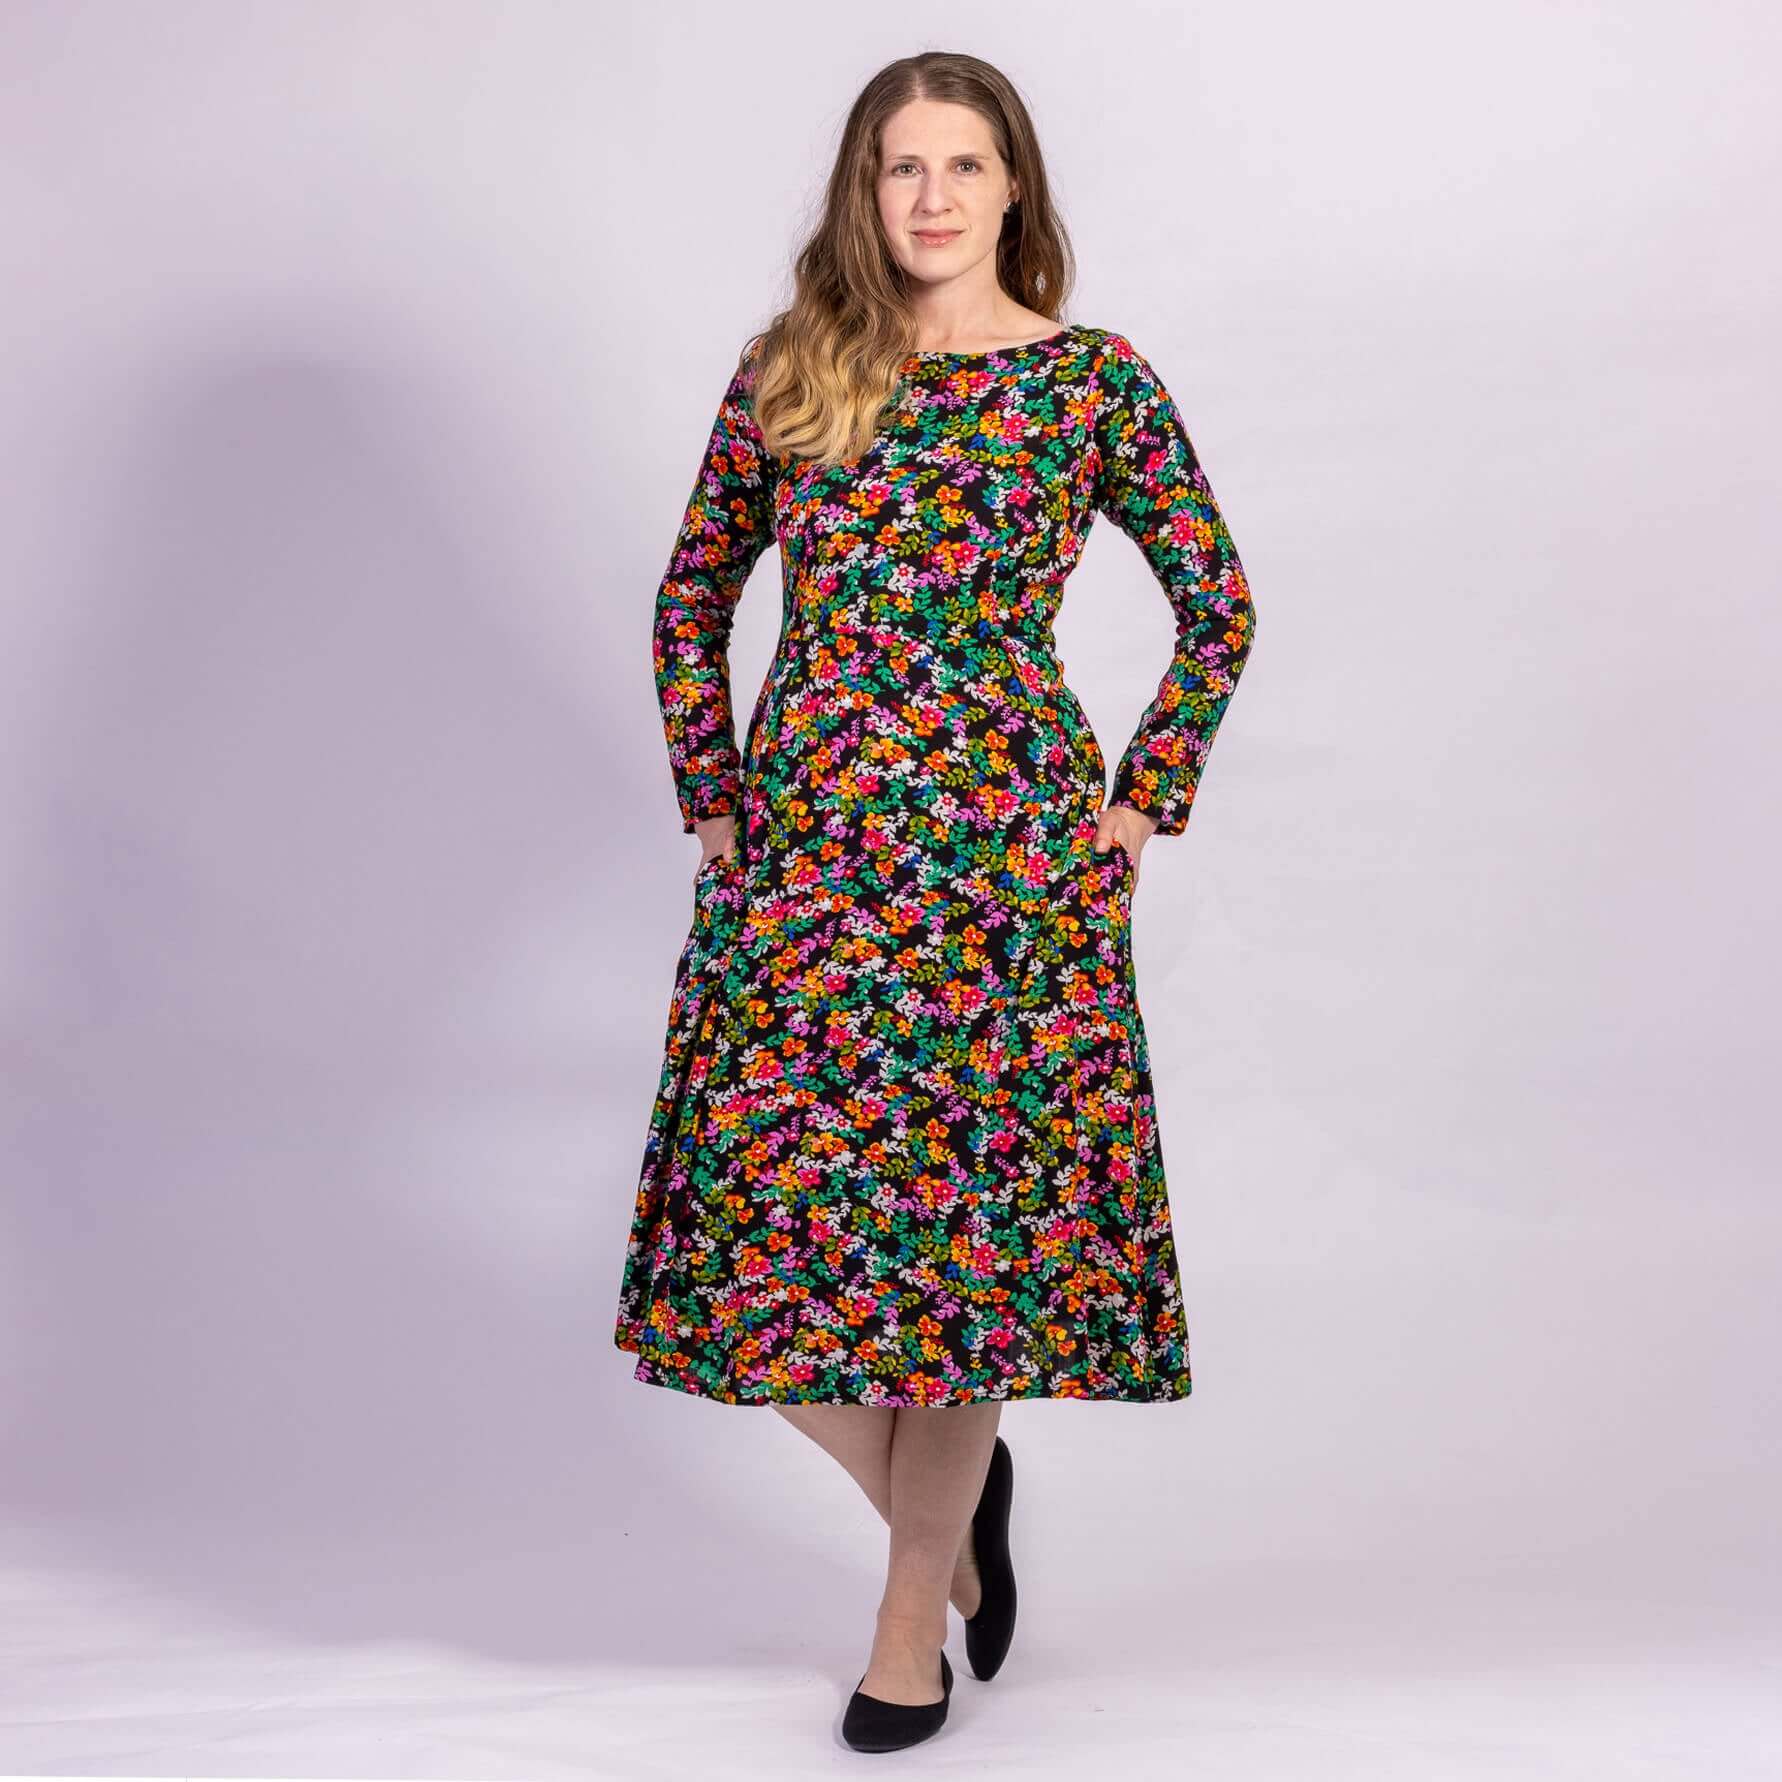 midi length floral dress for nz women